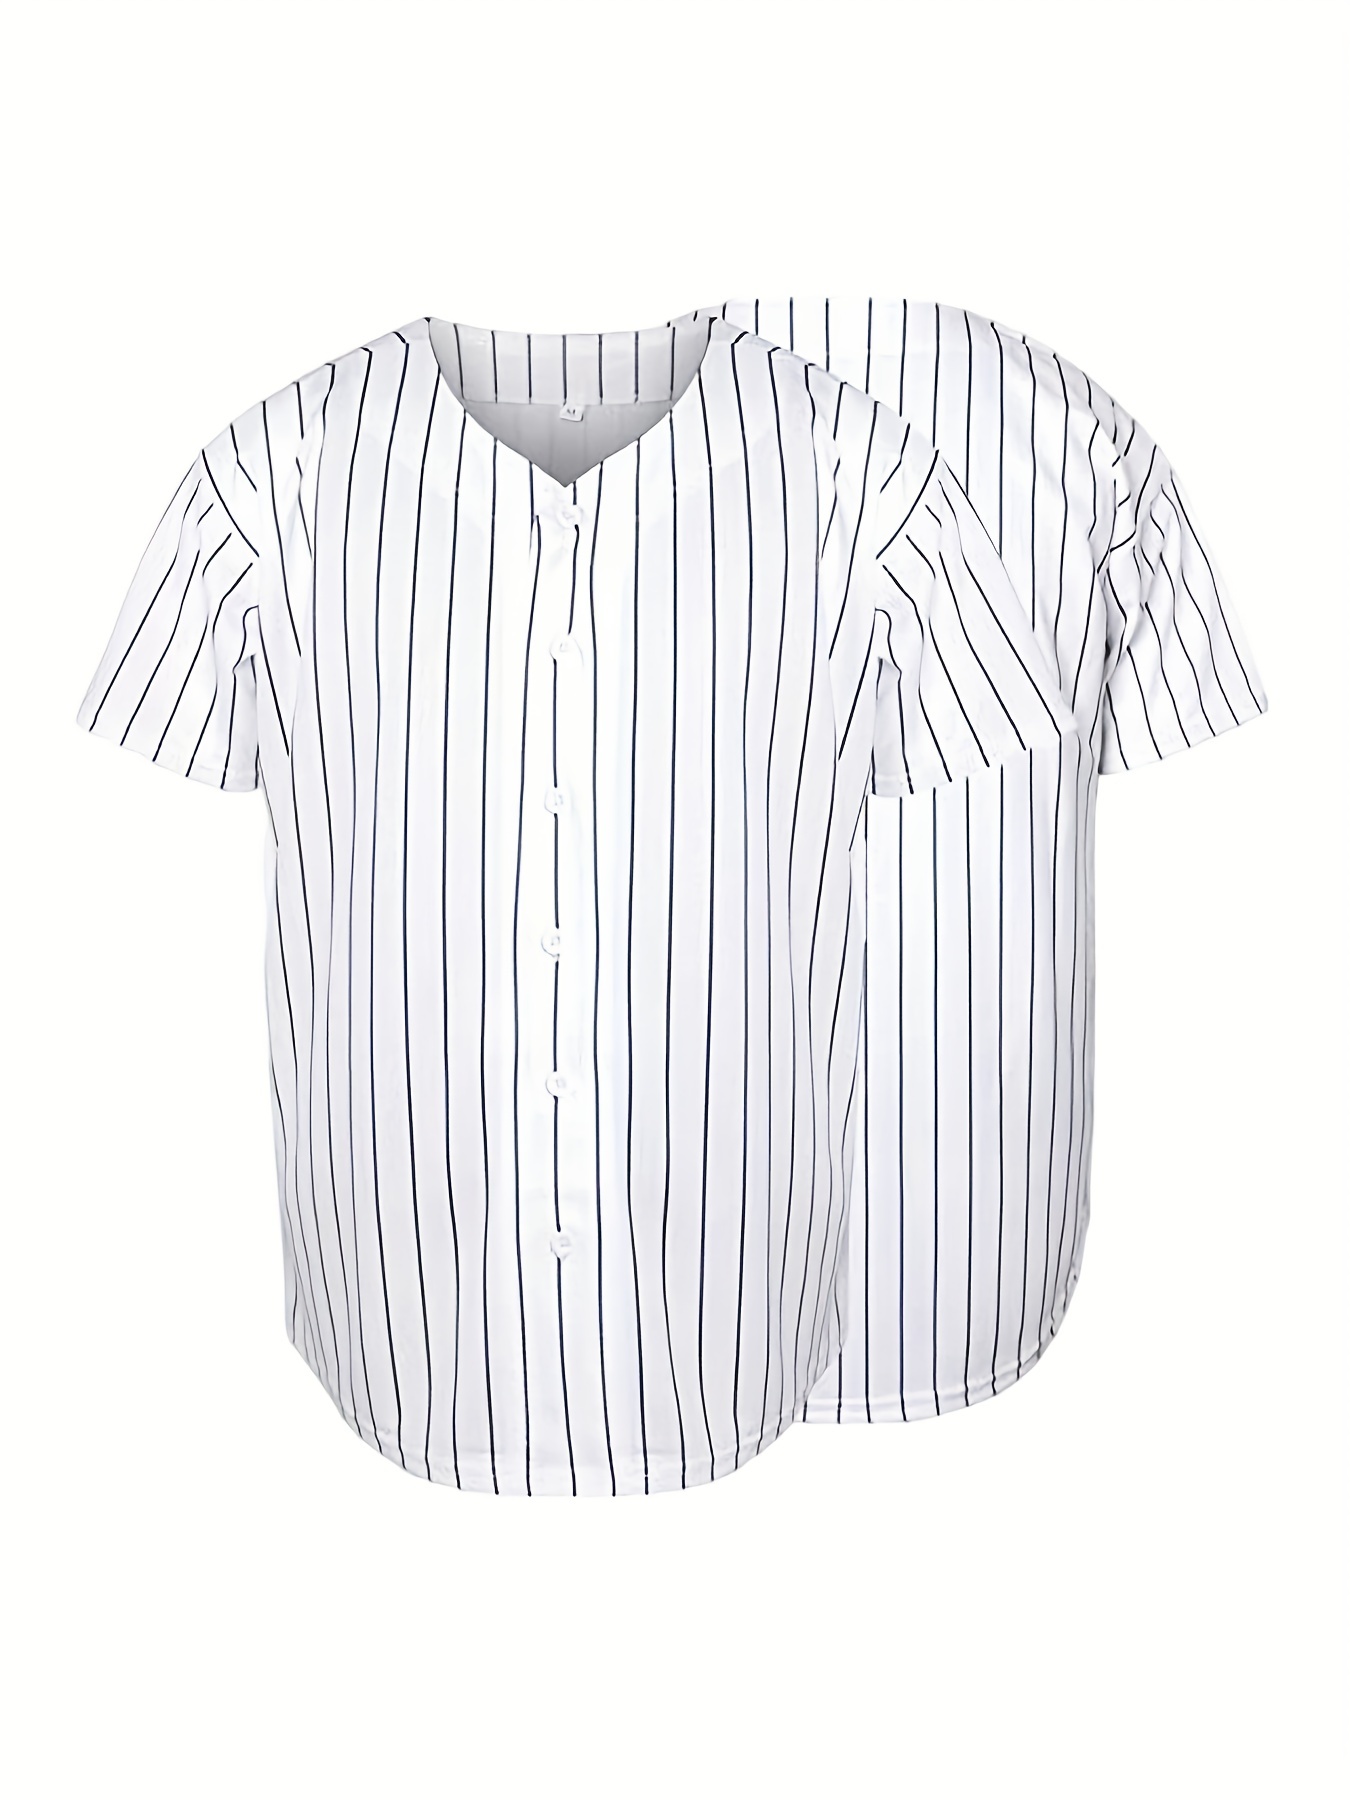 Unisex Button Down Plain Black Stripe Baseball Jerseys